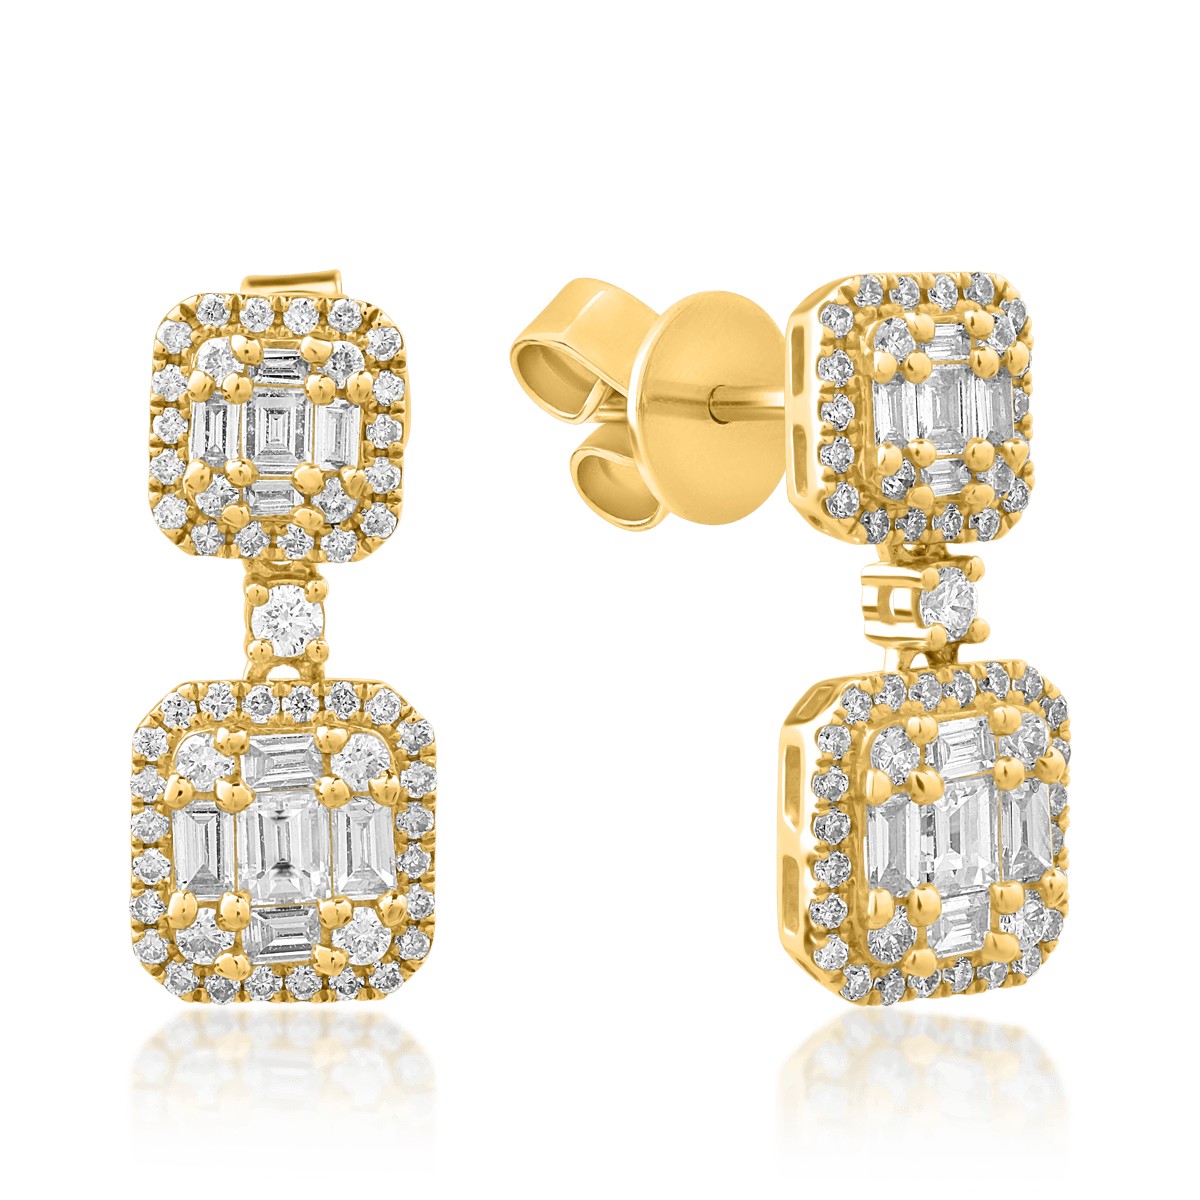 18K yellow gold earrings with 0.89ct diamonds